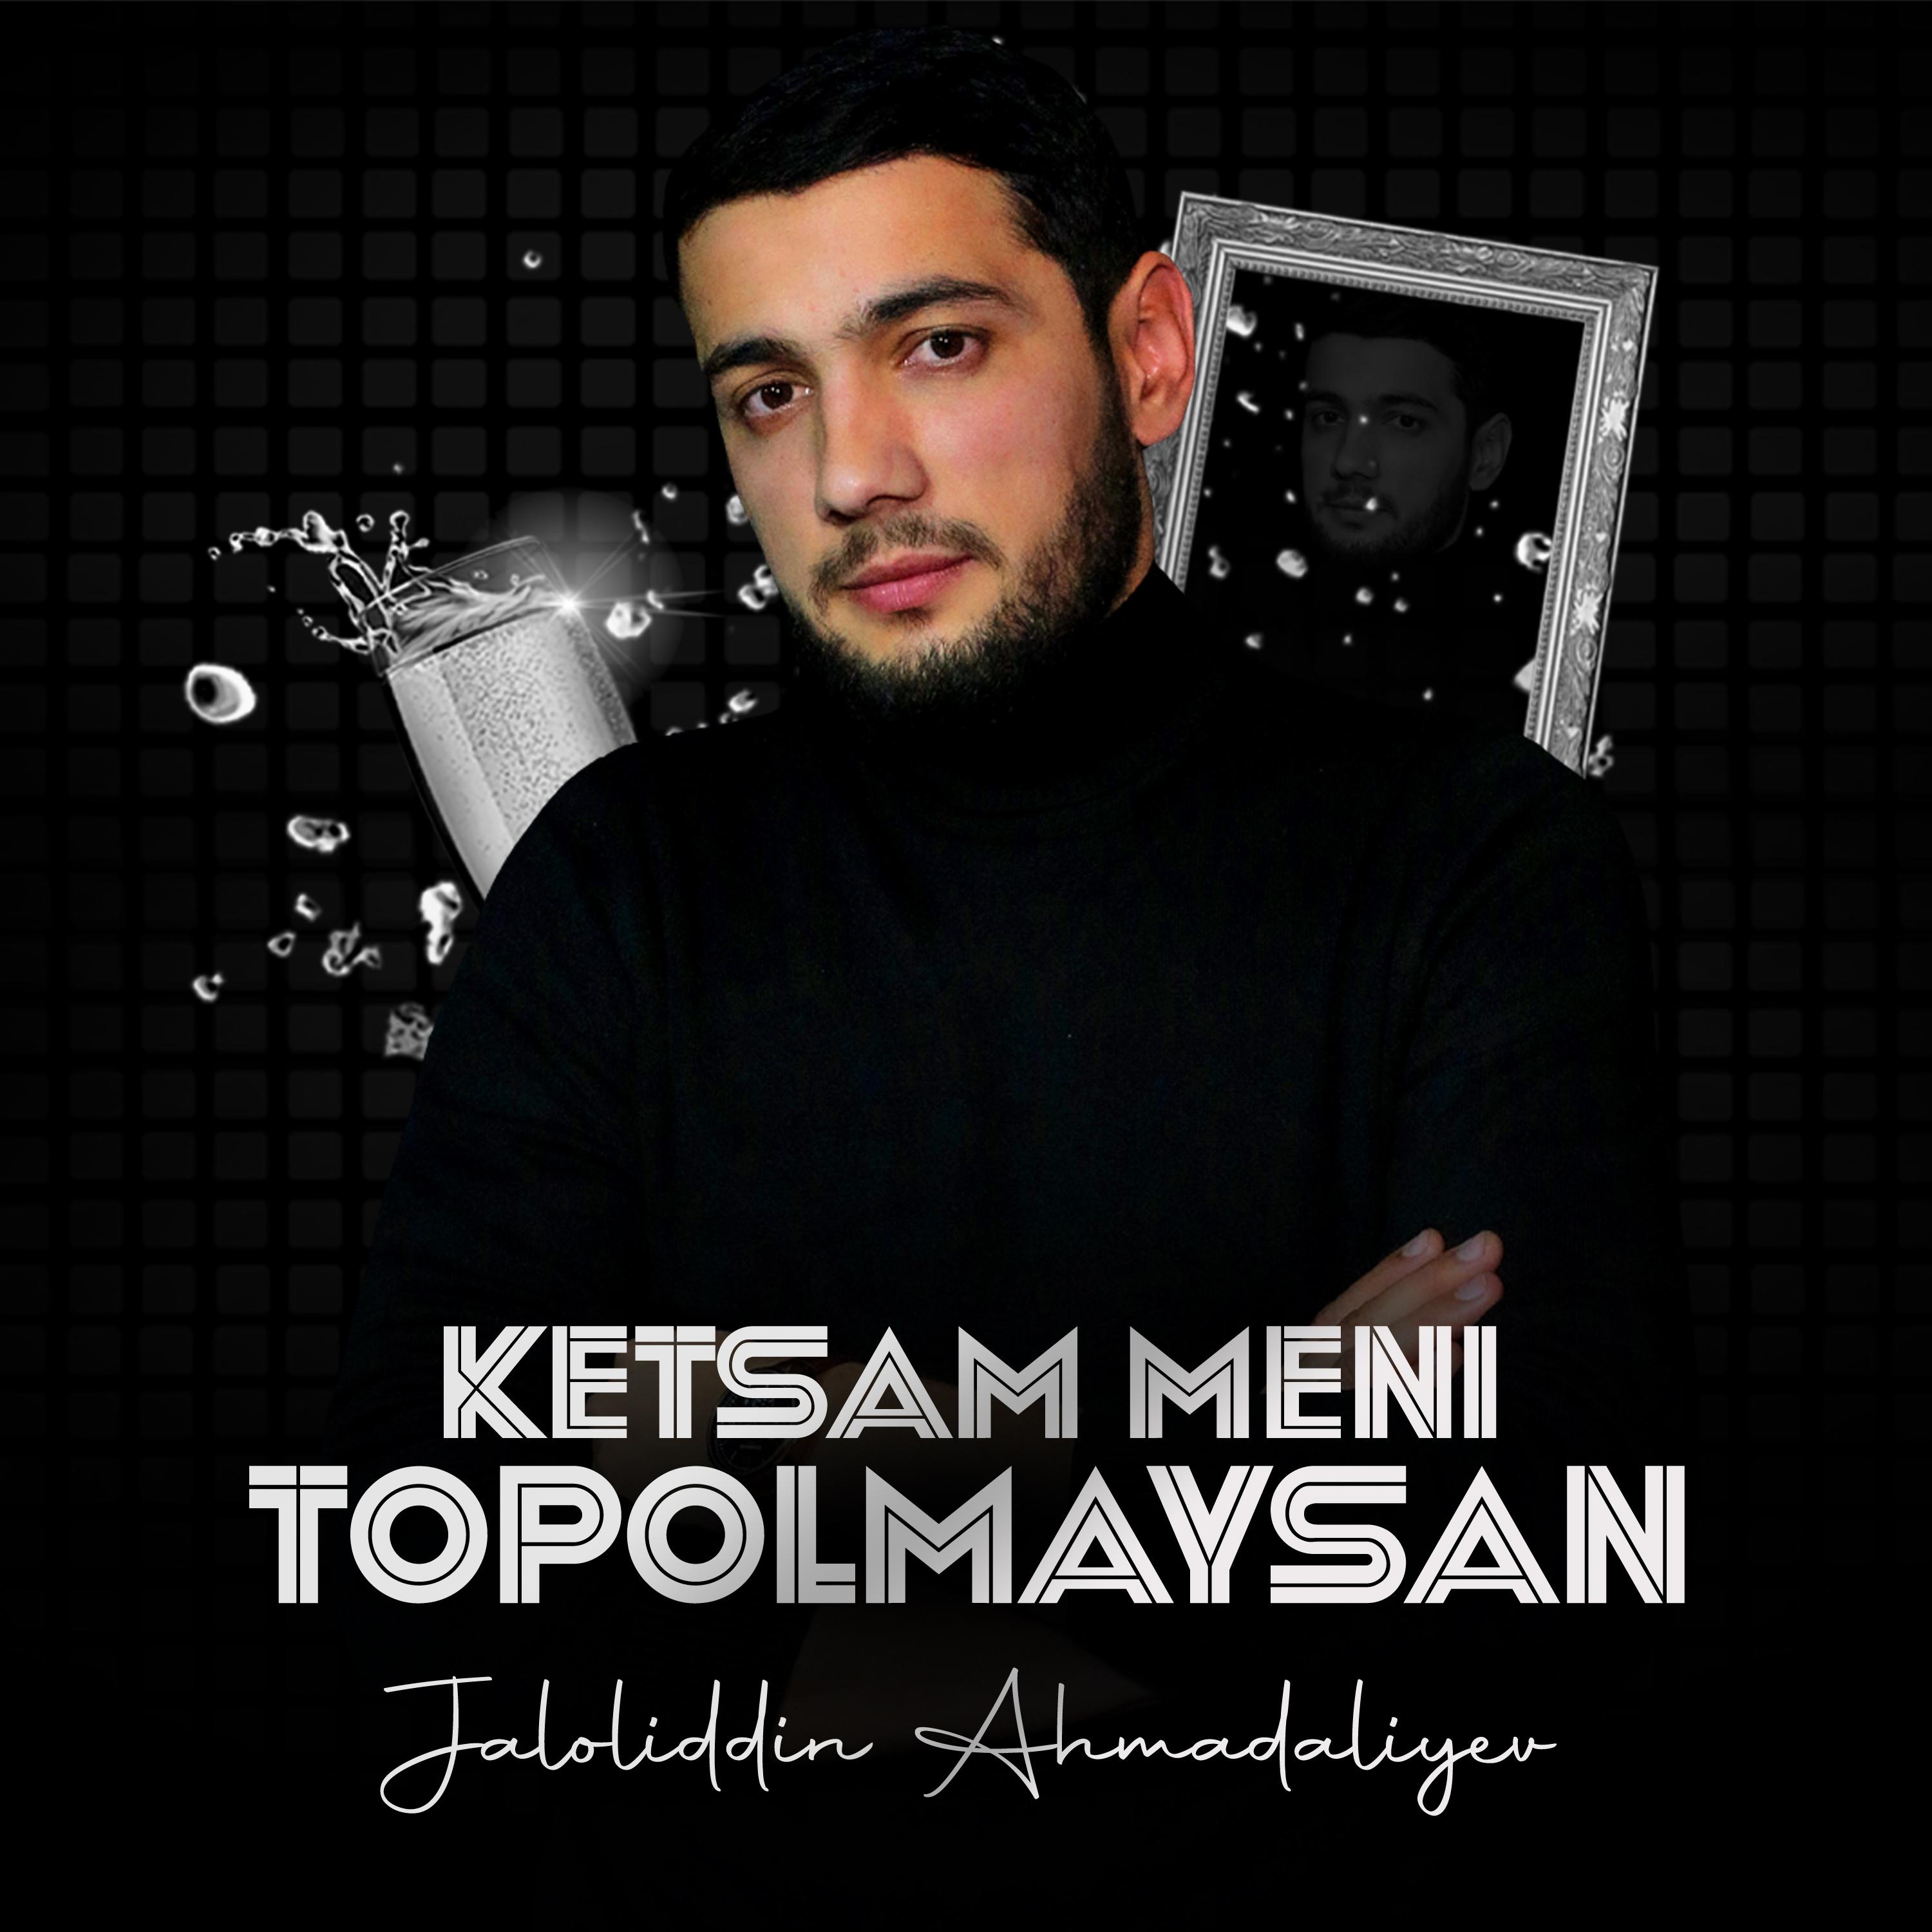 Ketsam meni topolmaysan歌词 歌手Jaloliddin Ahmadaliyev-专辑Ketsam meni topolmaysan-单曲《Ketsam meni topolmaysan》LRC歌词下载